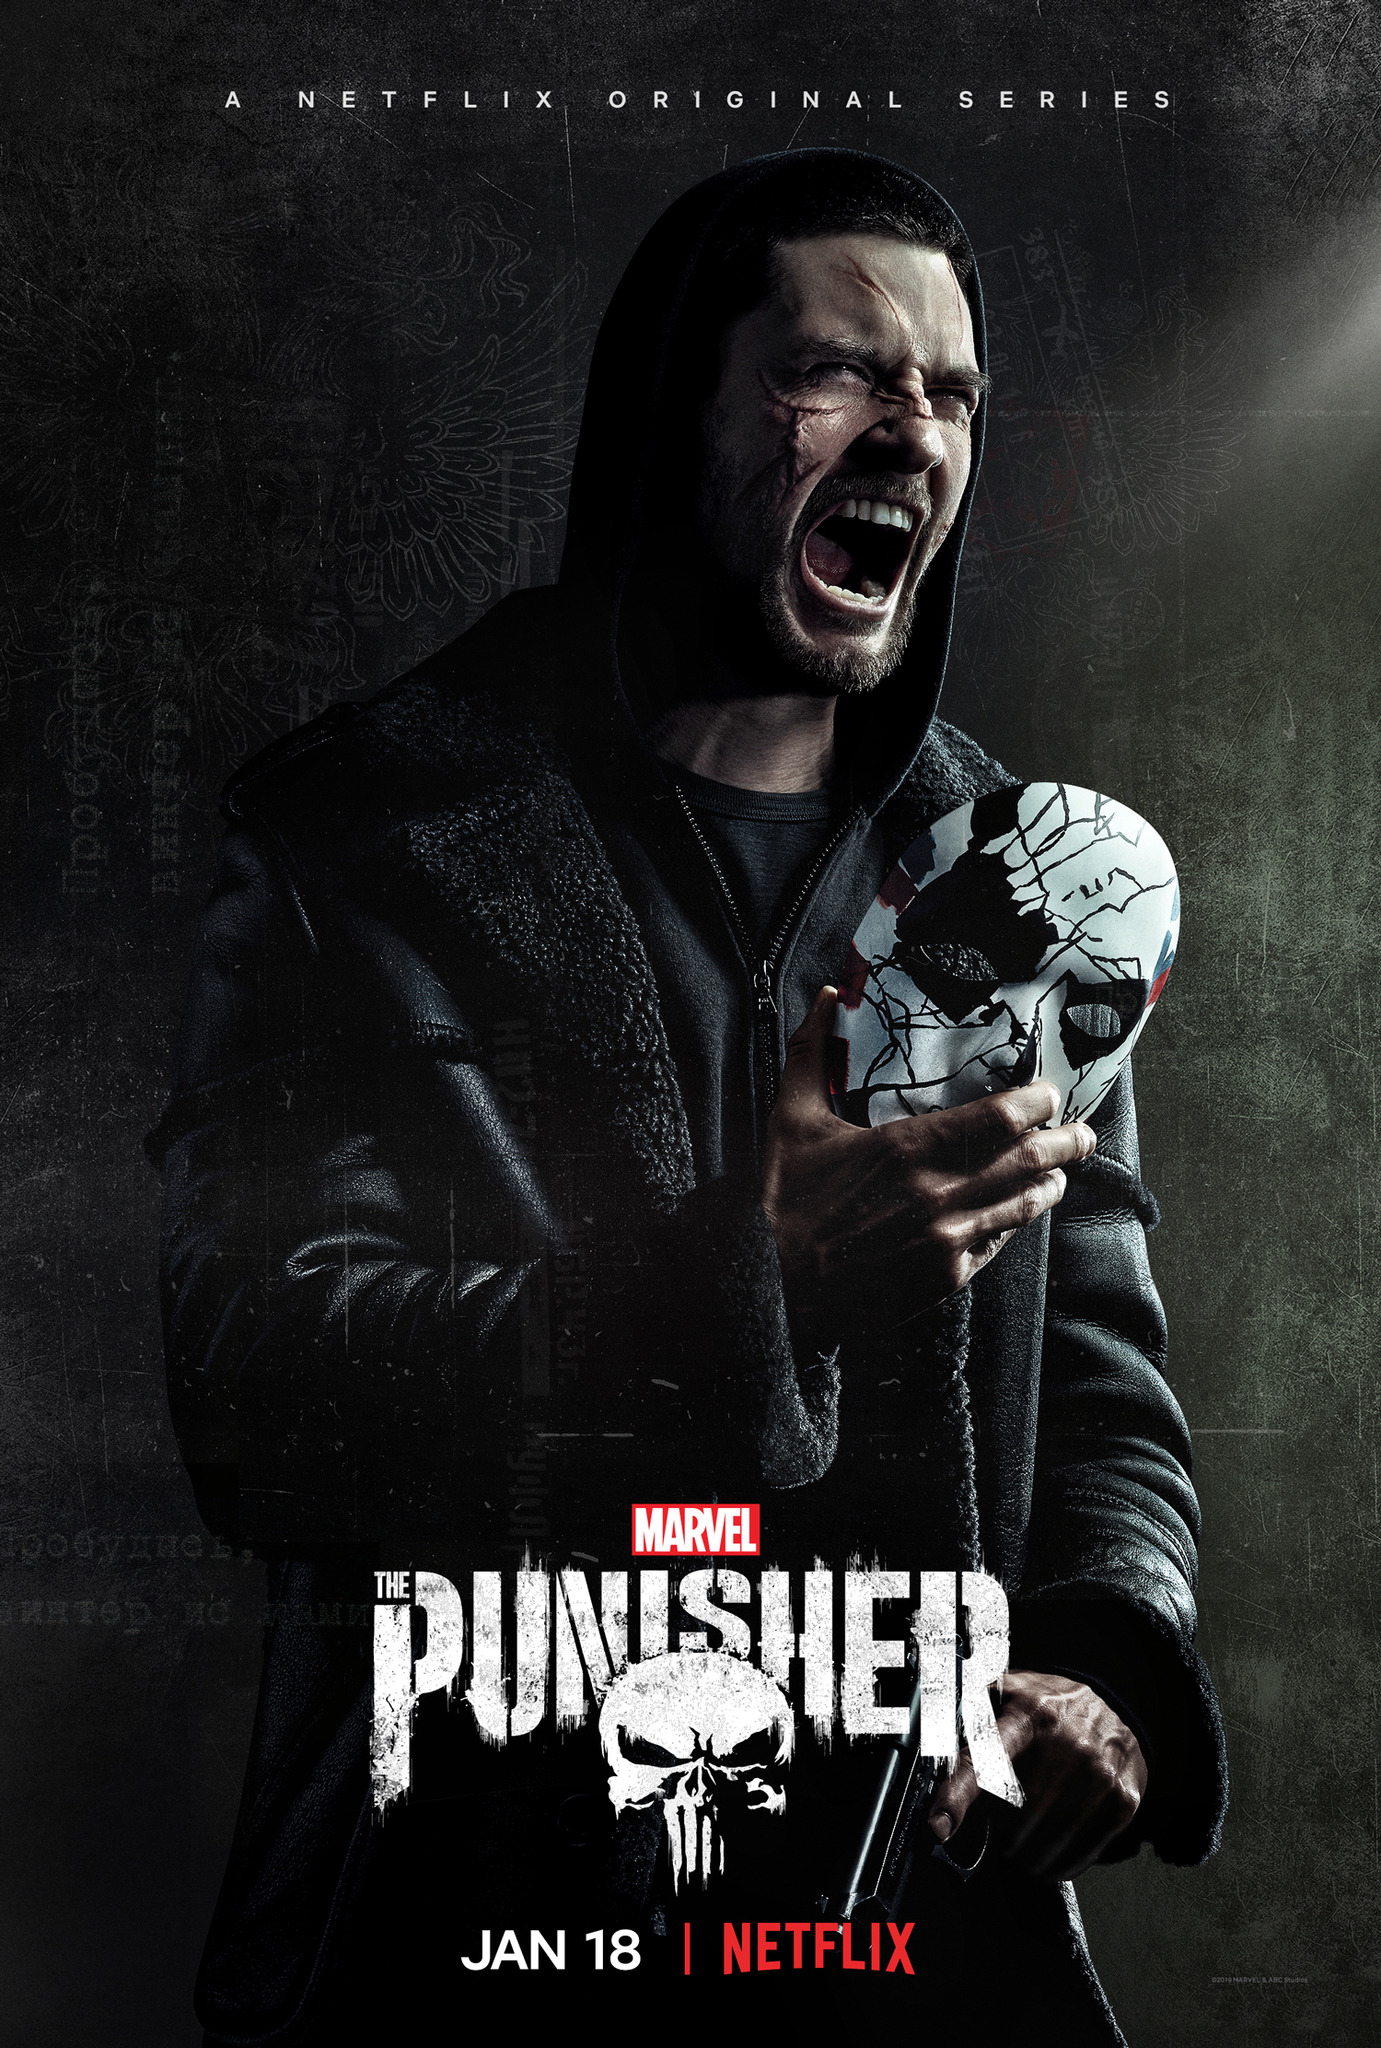 Mega Sized TV Poster Image for The Punisher (#5 of 6)